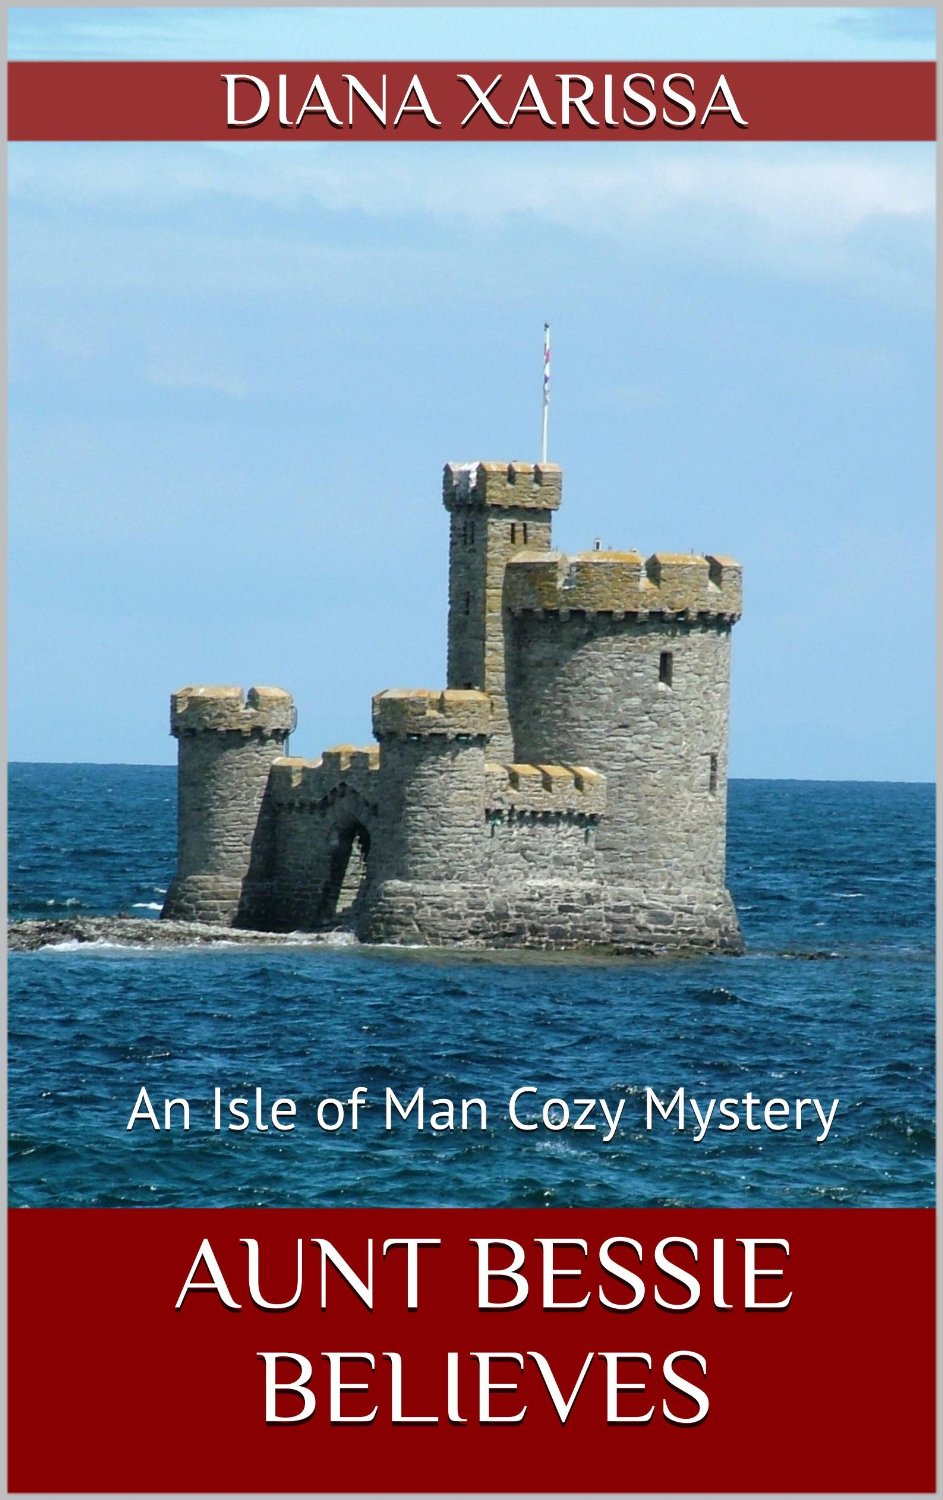 Aunt Bessie Believes (An Isle of Man Cozy Mystery Book 2) by Diana Xarissa